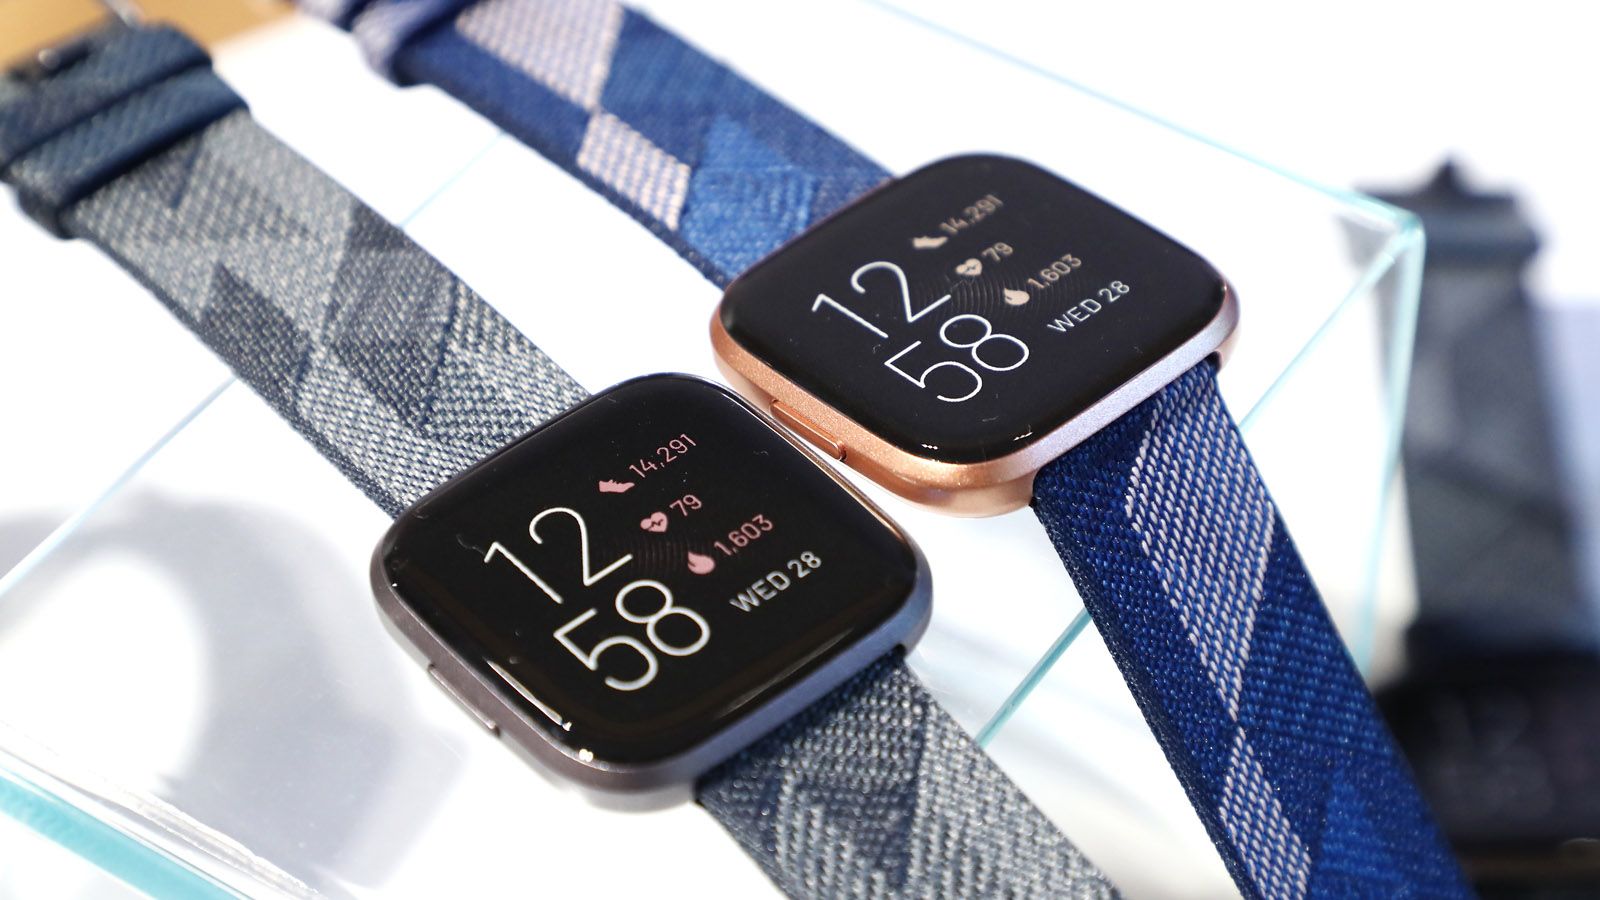 ｢Fitbit｣はアップルウォッチと何が違うのか 9月下旬に新商品投入し､知名度向上を狙う | IT･電機･半導体･部品 | 東洋経済オンライン